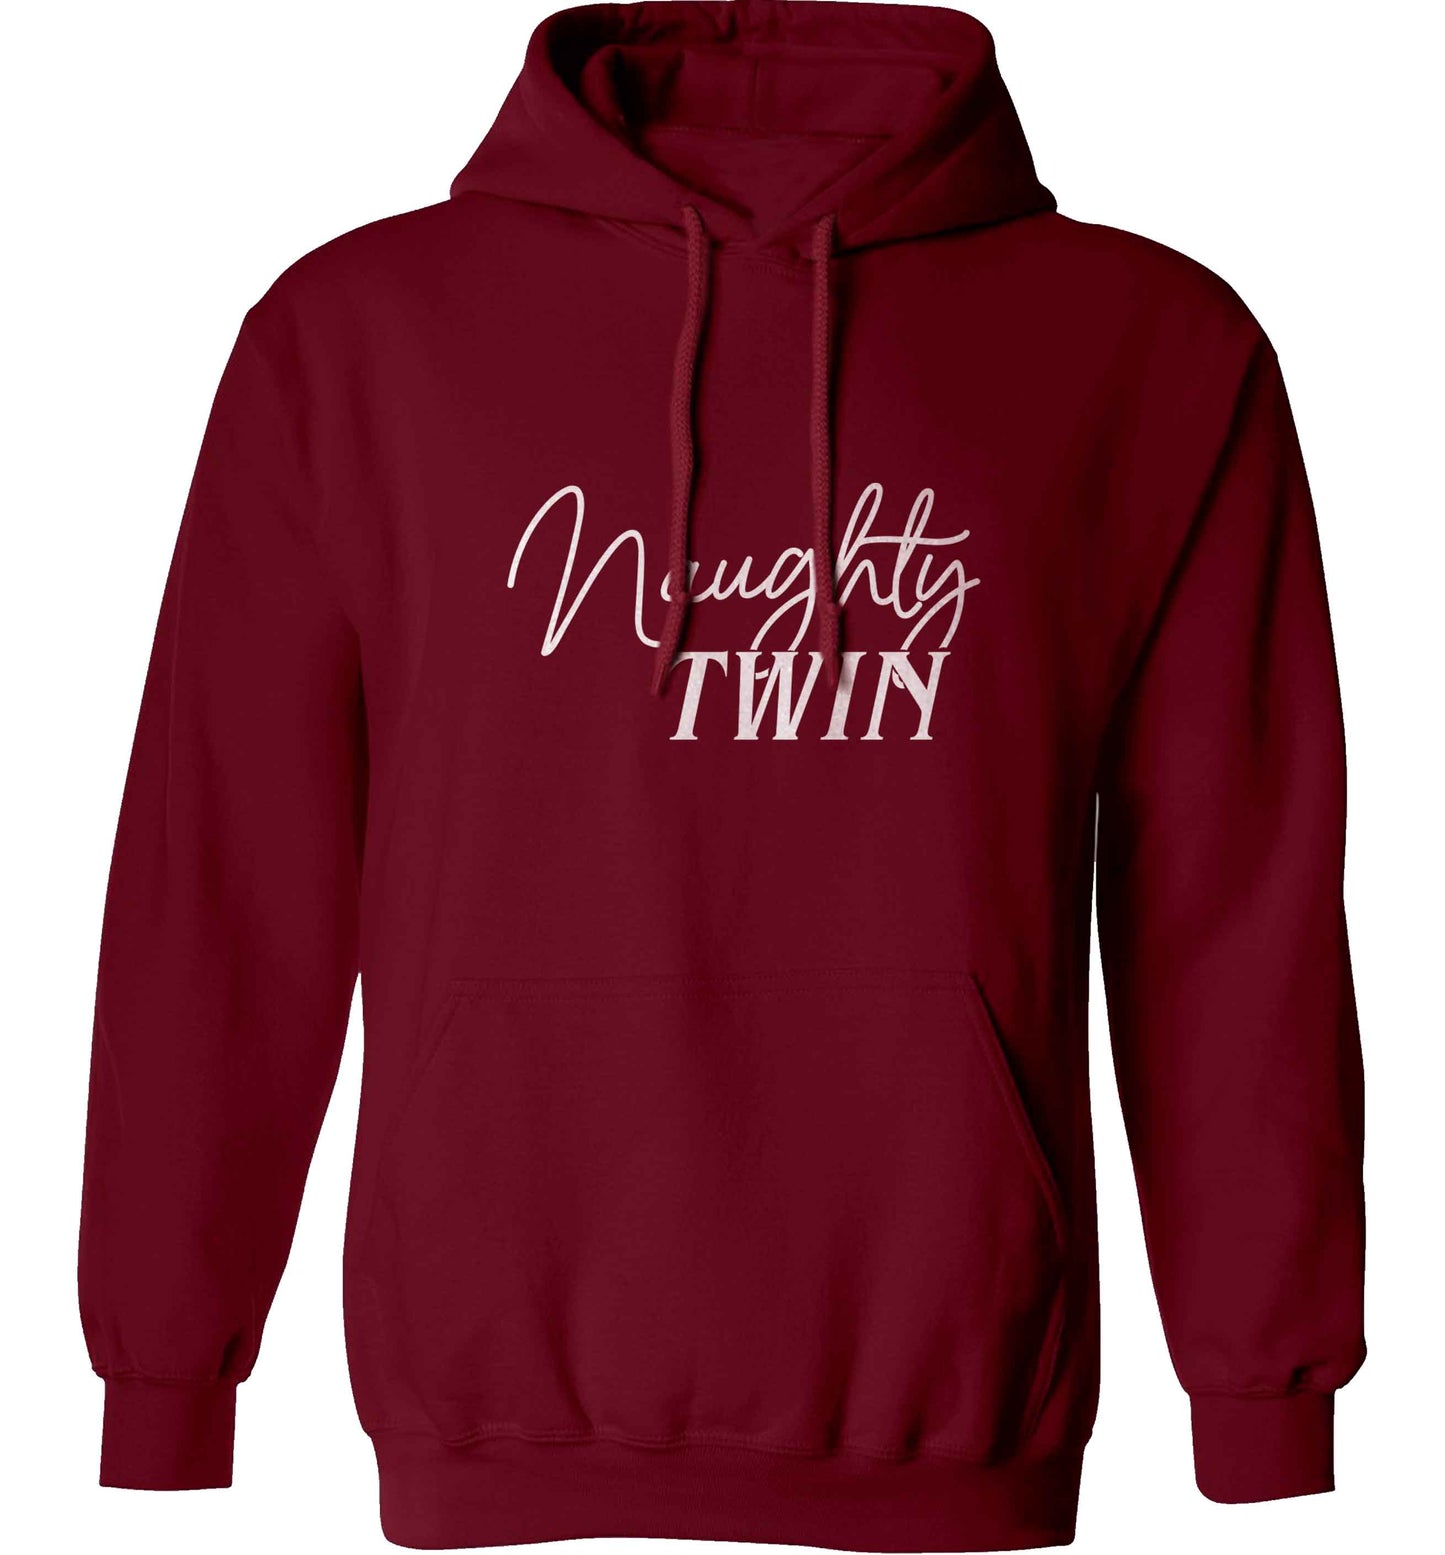 Naughty twin adults unisex maroon hoodie 2XL